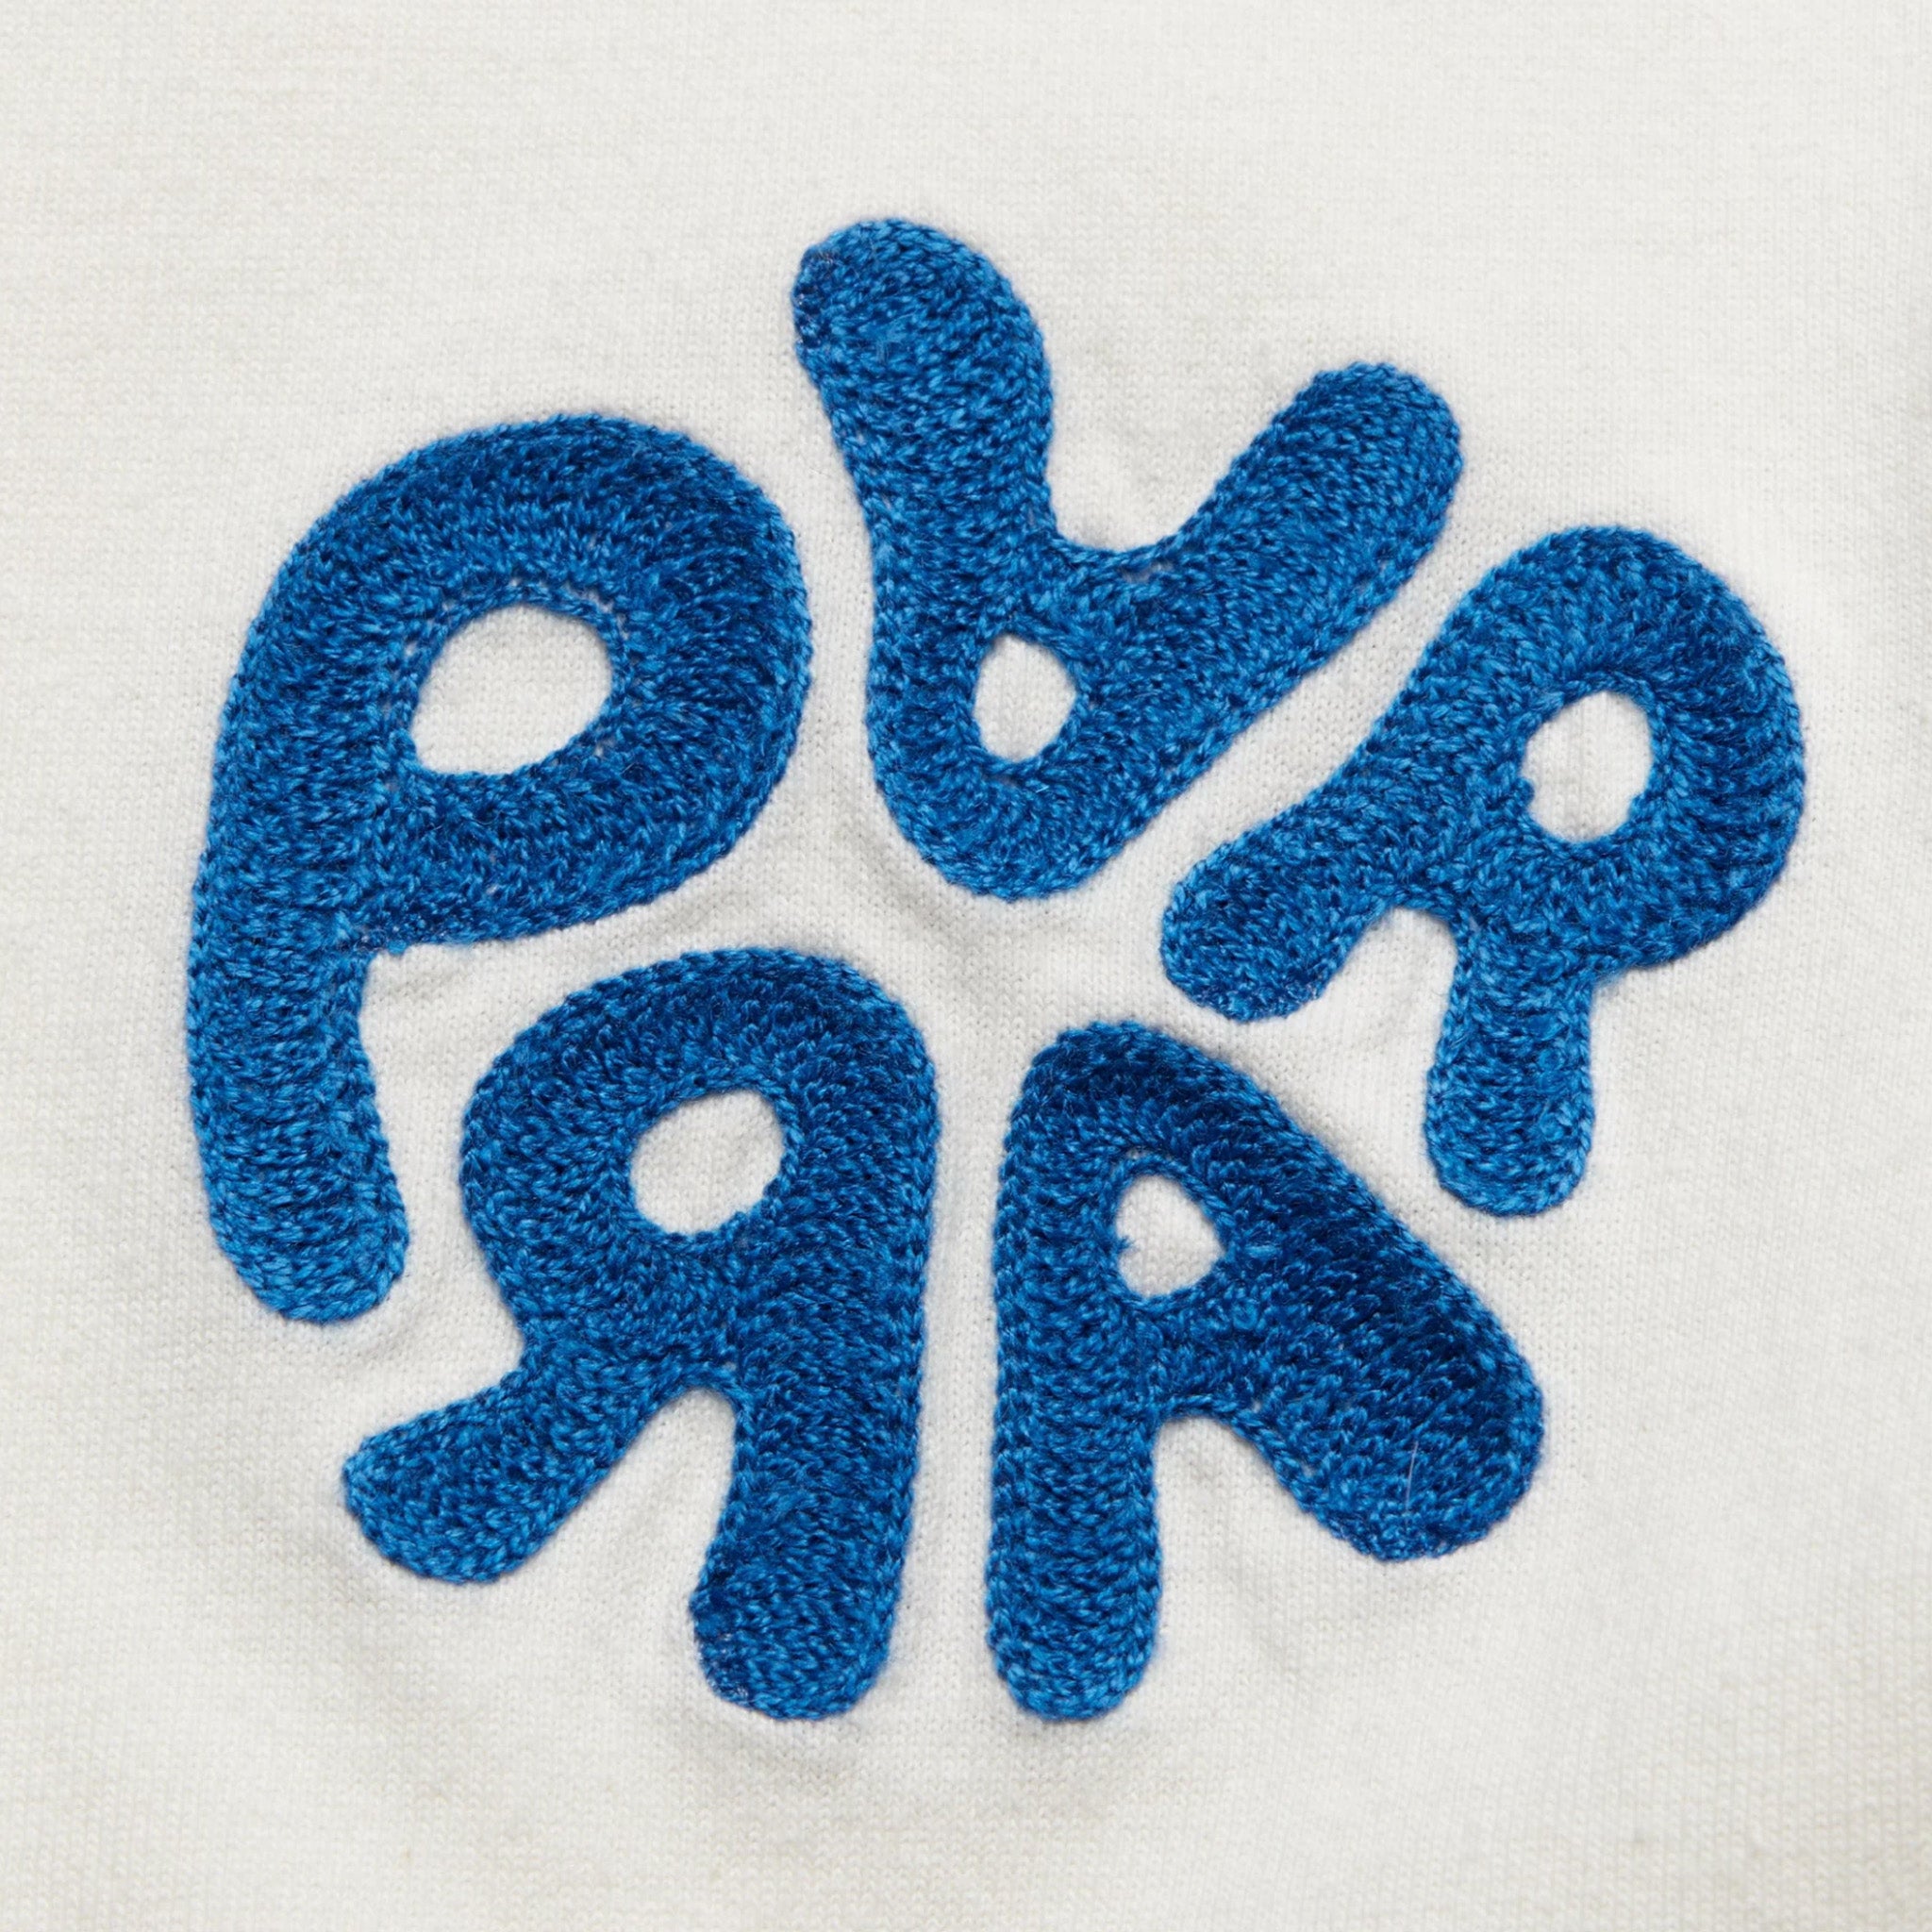 By Parra 1976 Logo T-Shirt (Off White) - August Shop